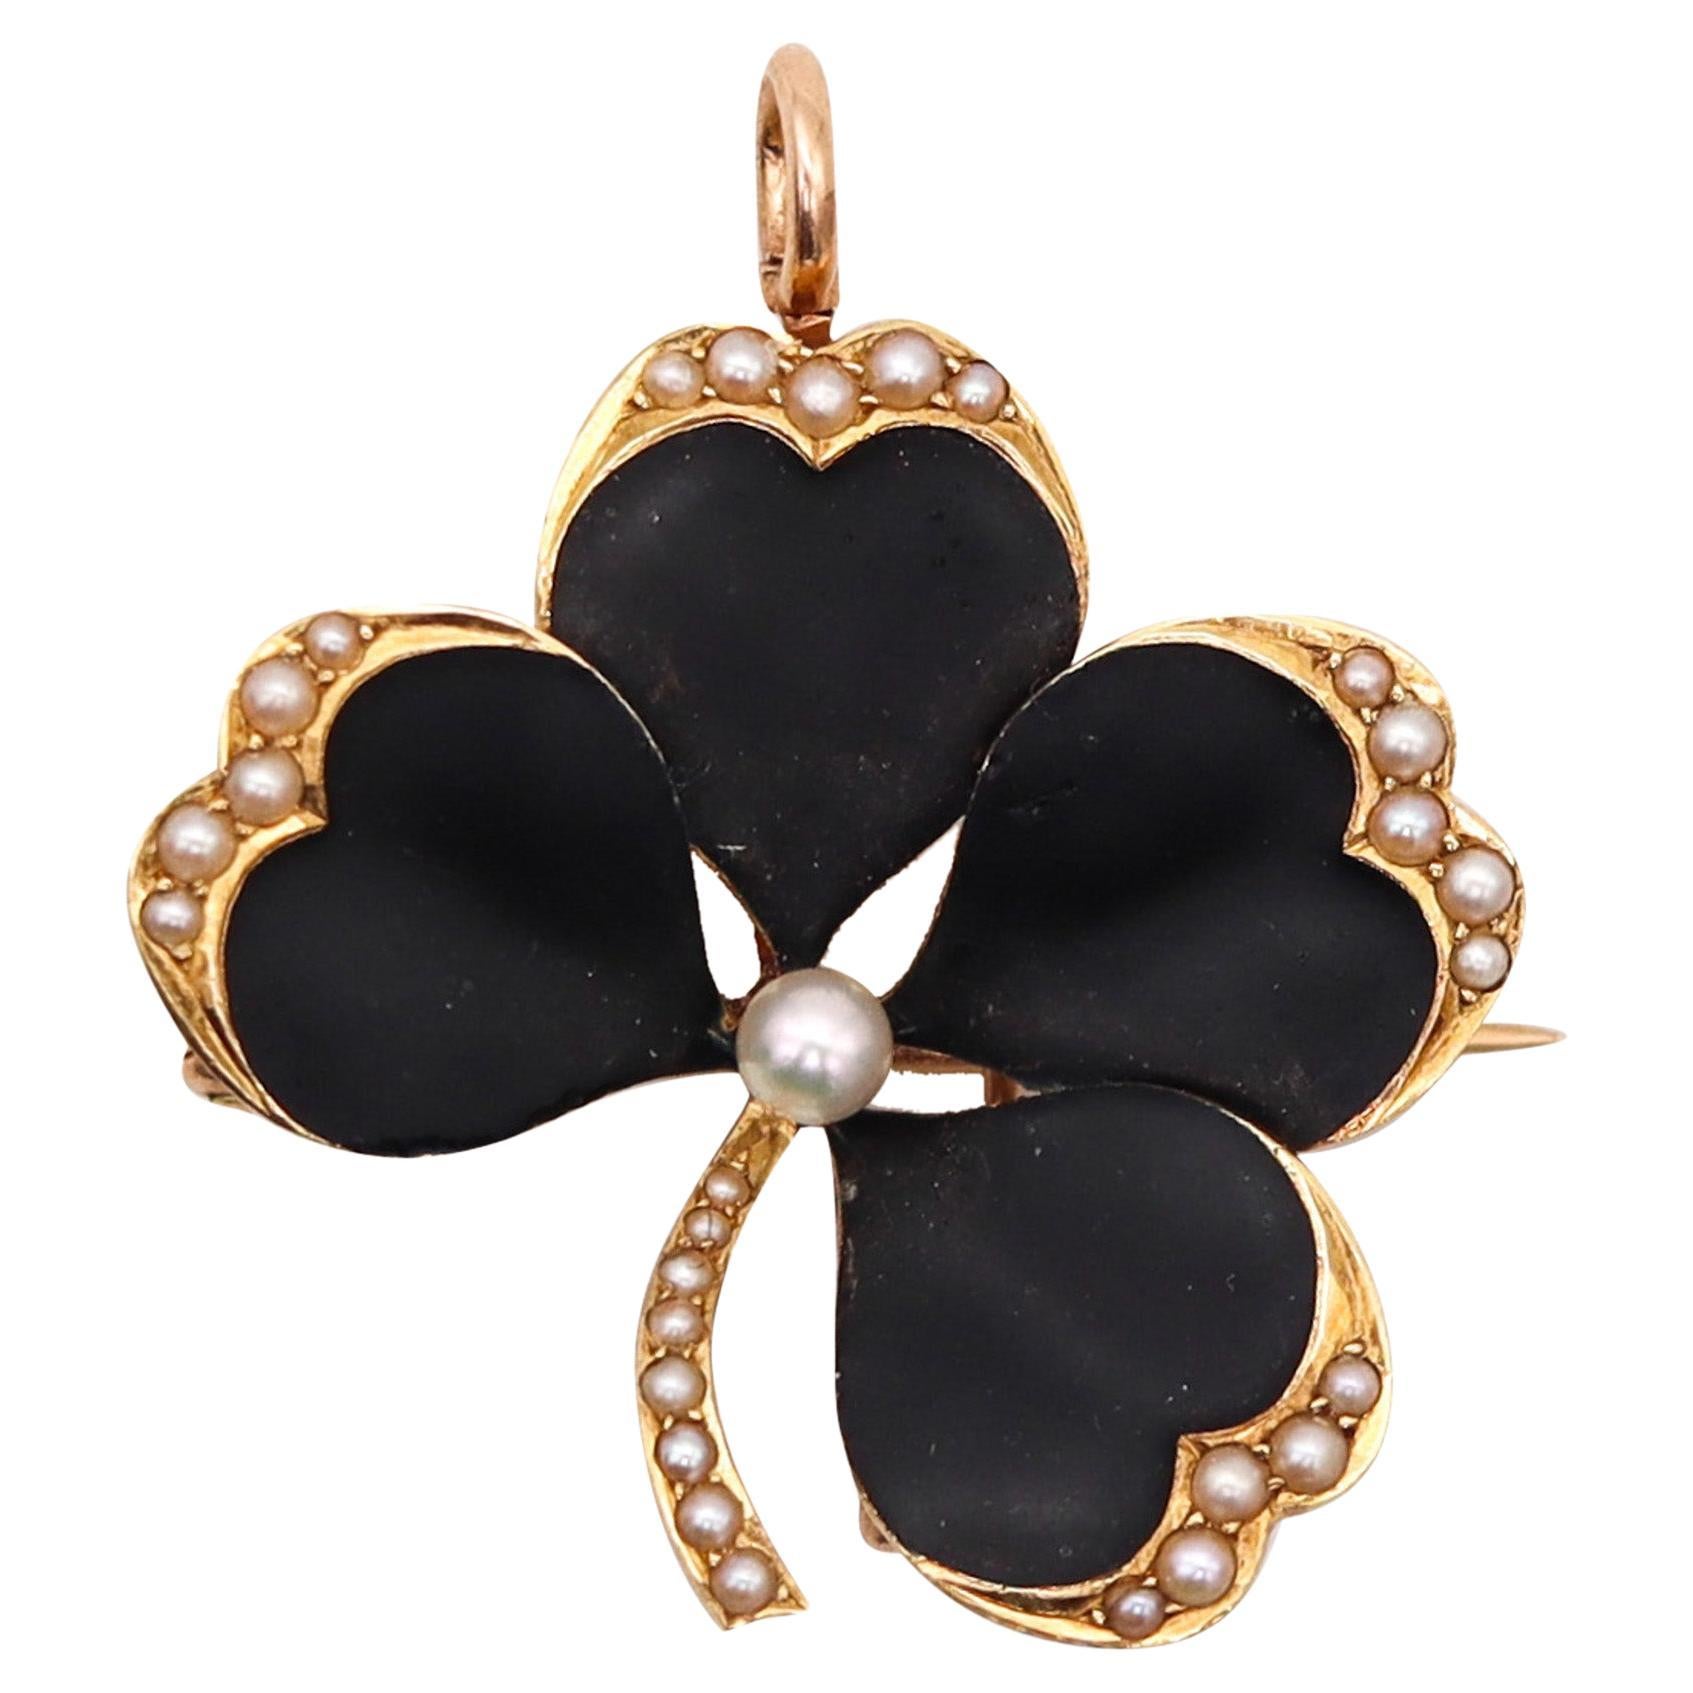 Crane & Theurer 1900 Art Nouveau Enameled Clover Pendant 14Kt Gold With Pearls